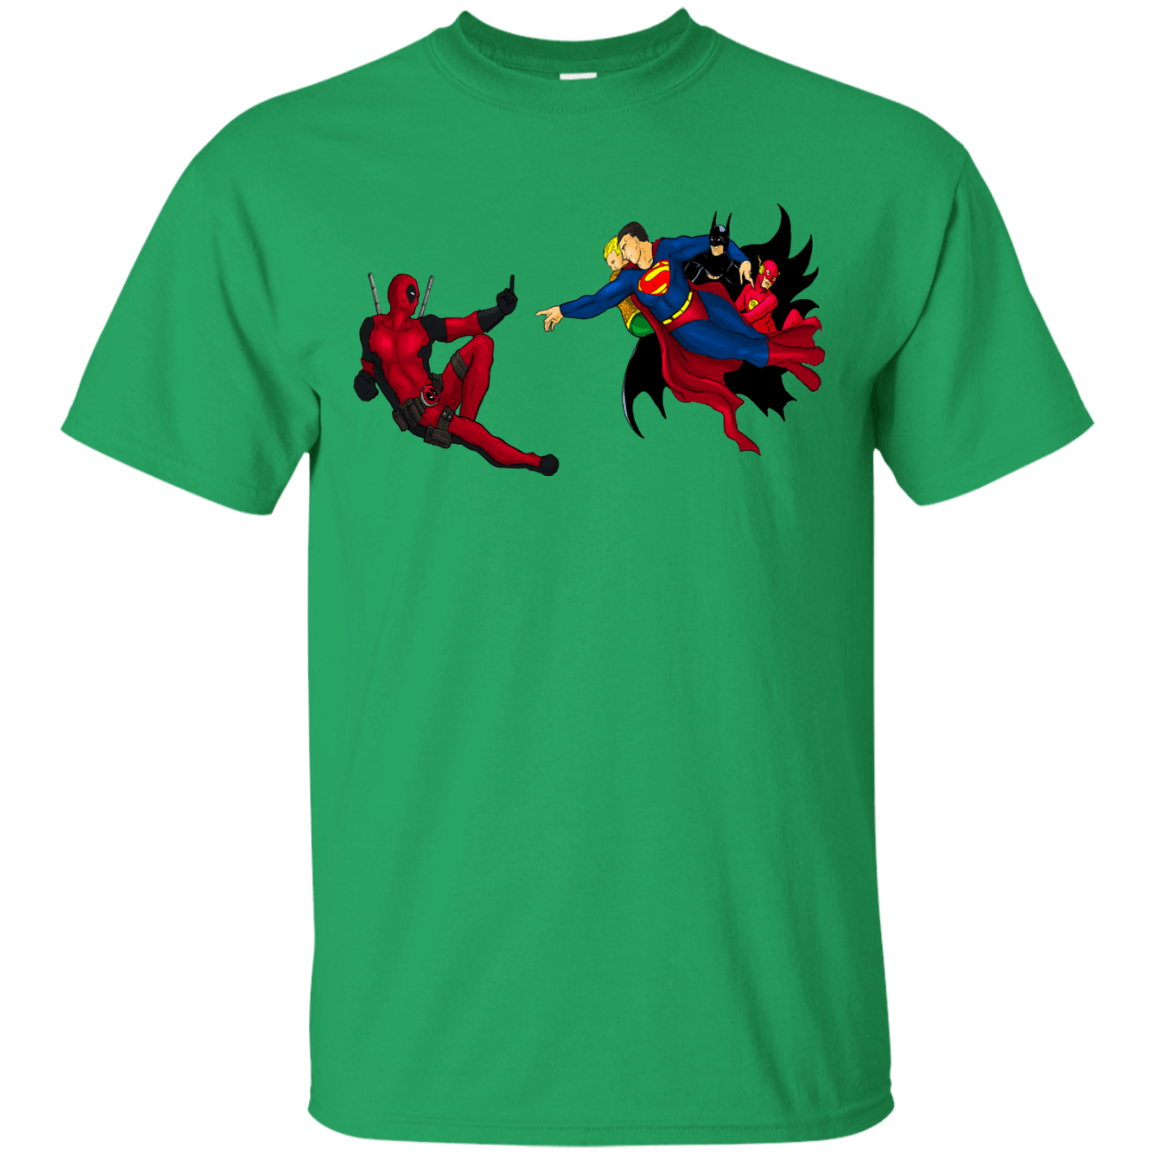 T-Shirts Irish Green / S Creation of the Merc T-Shirt